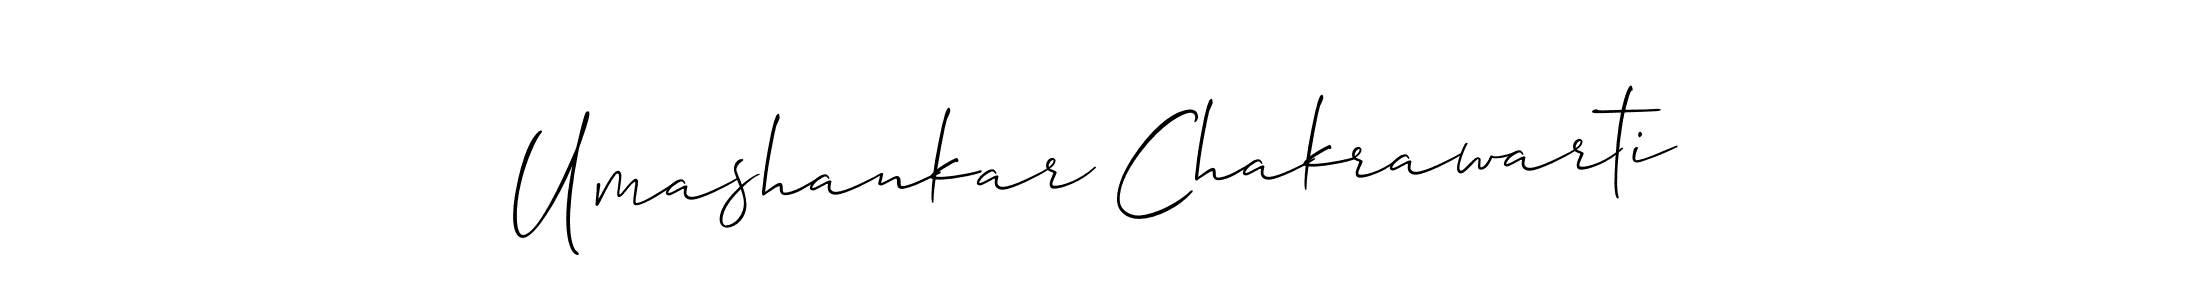 How to Draw Umashankar Chakrawarti signature style? Allison_Script is a latest design signature styles for name Umashankar Chakrawarti. Umashankar Chakrawarti signature style 2 images and pictures png